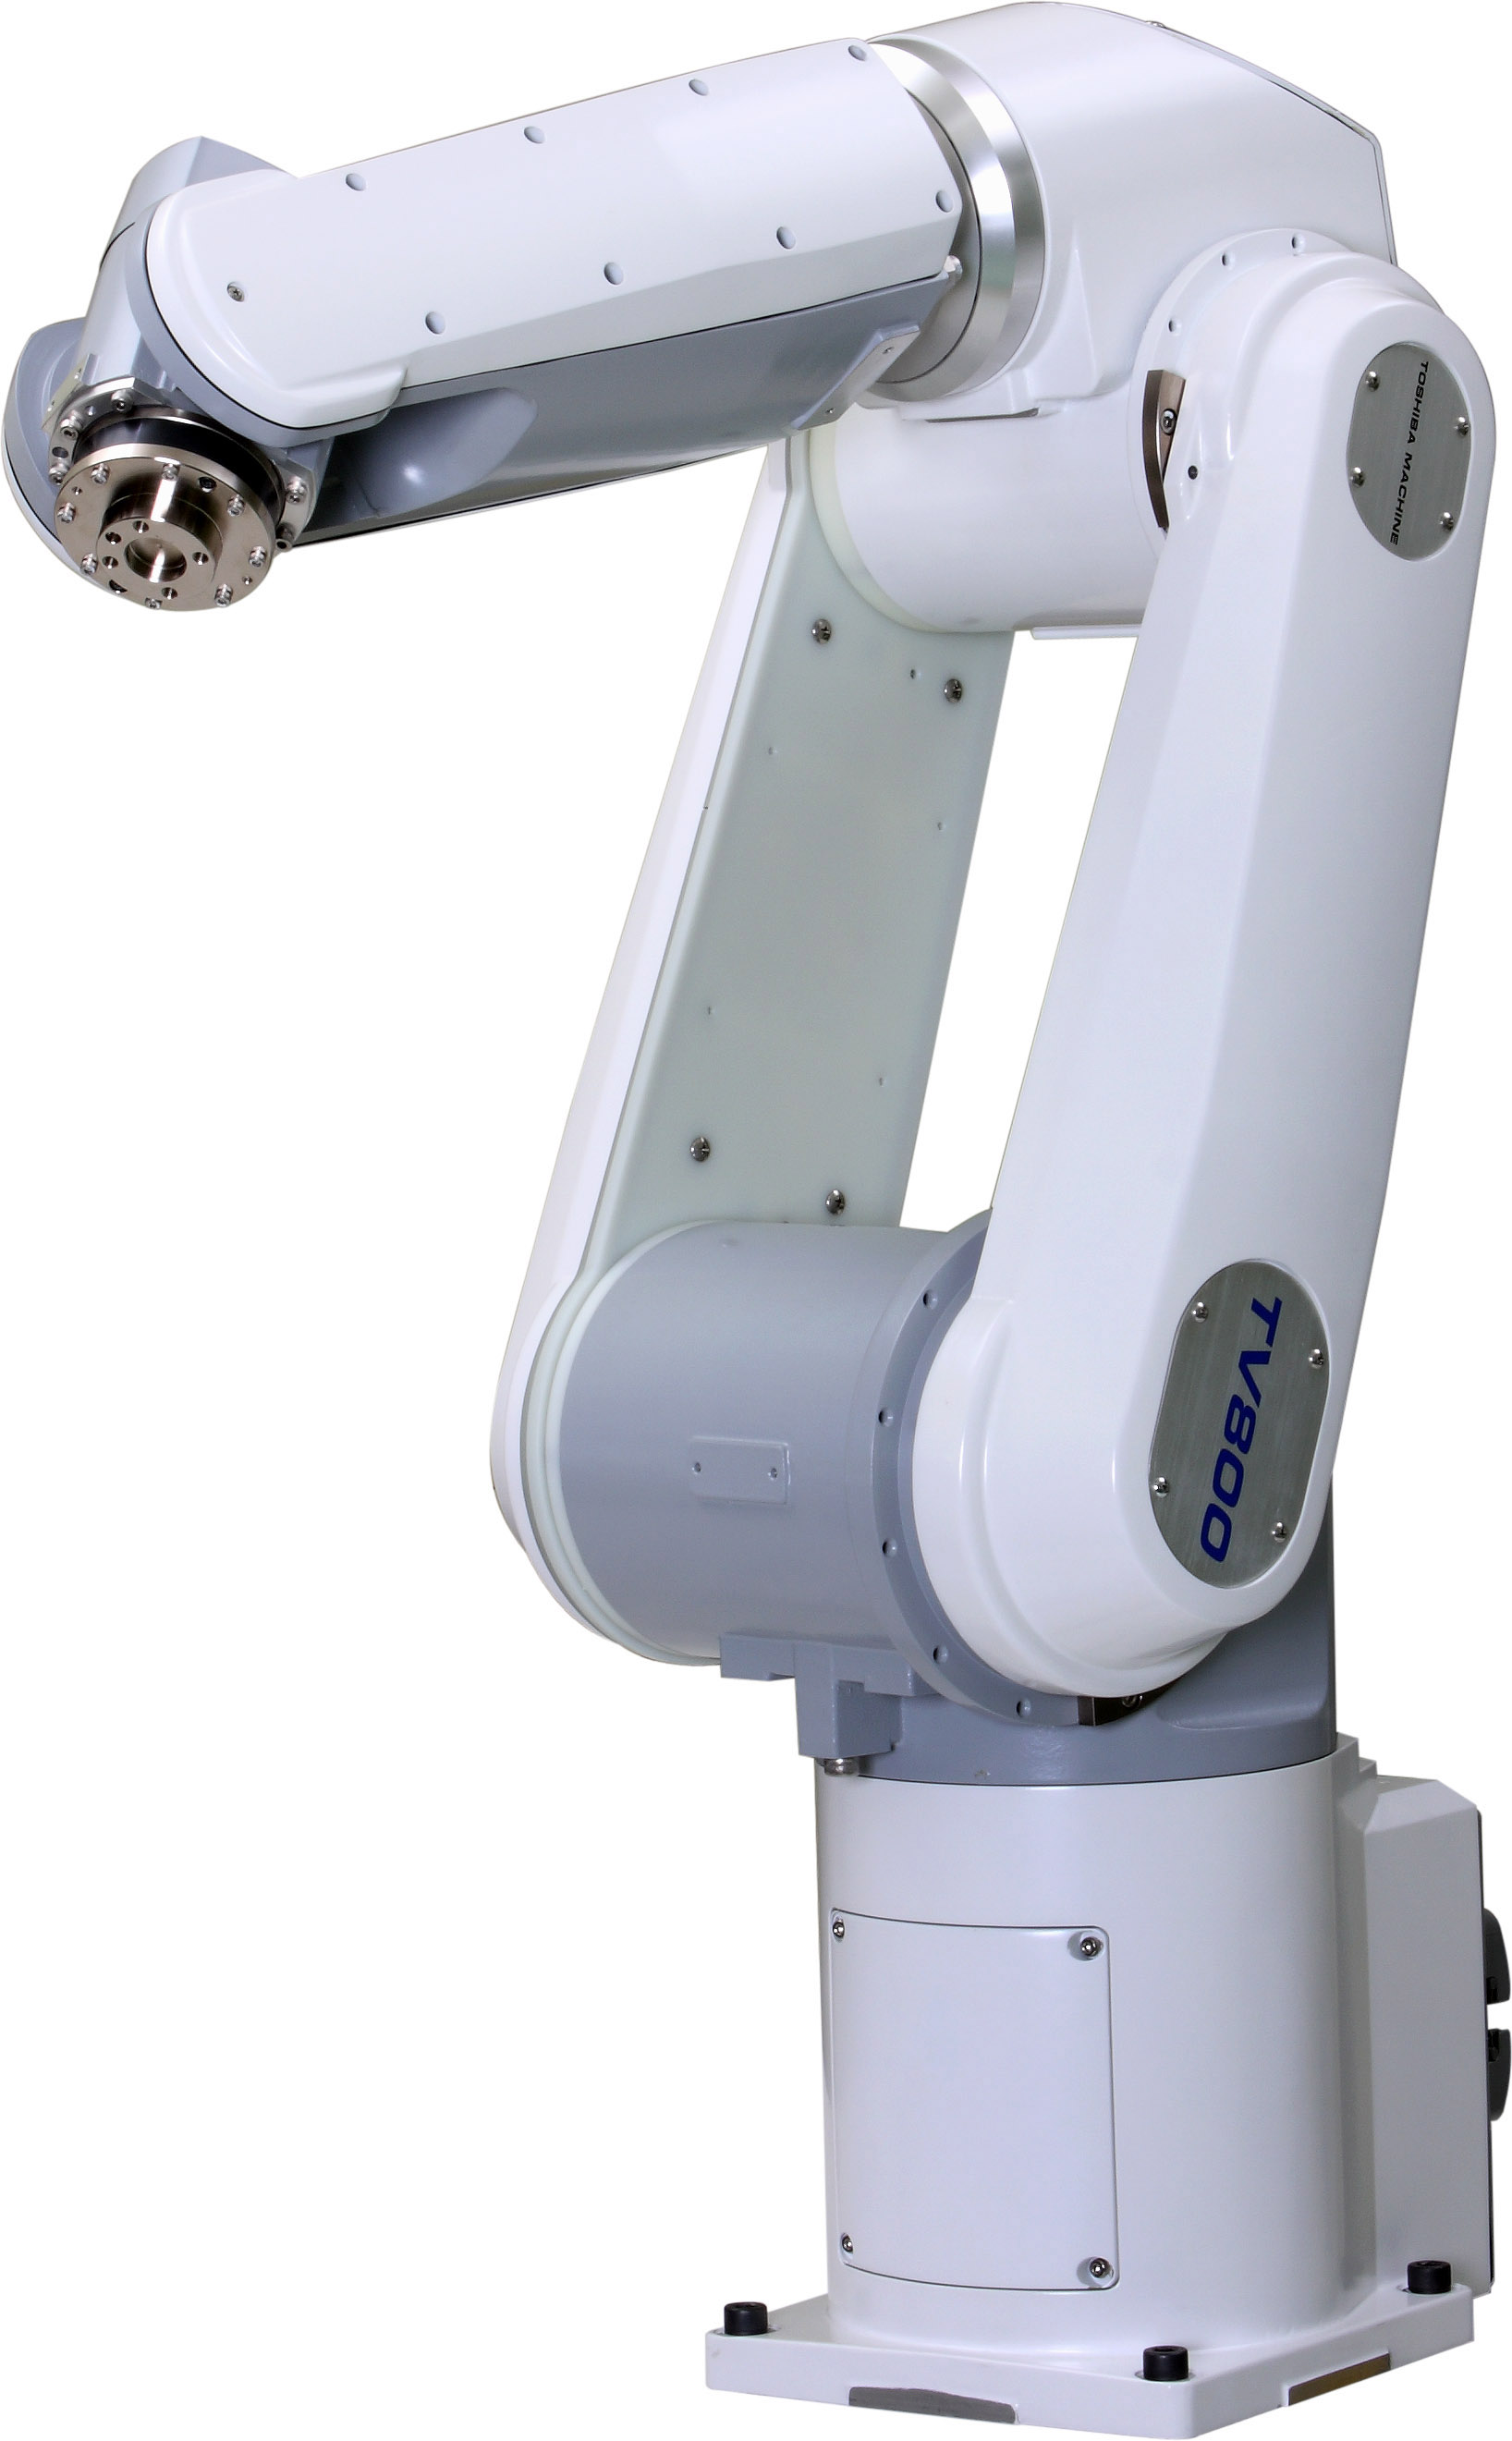 ROBOT TOSHIBA MACHINE TV800 DELTA ROBOTIQUE